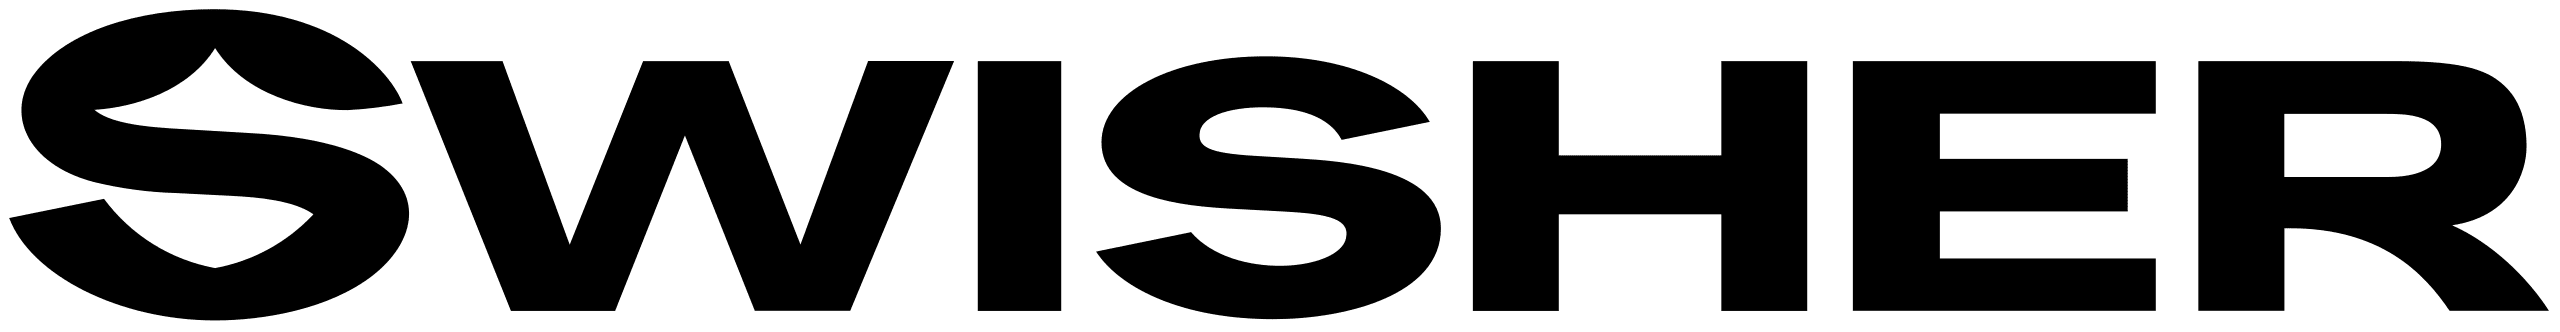 Swisher company logo.svg |